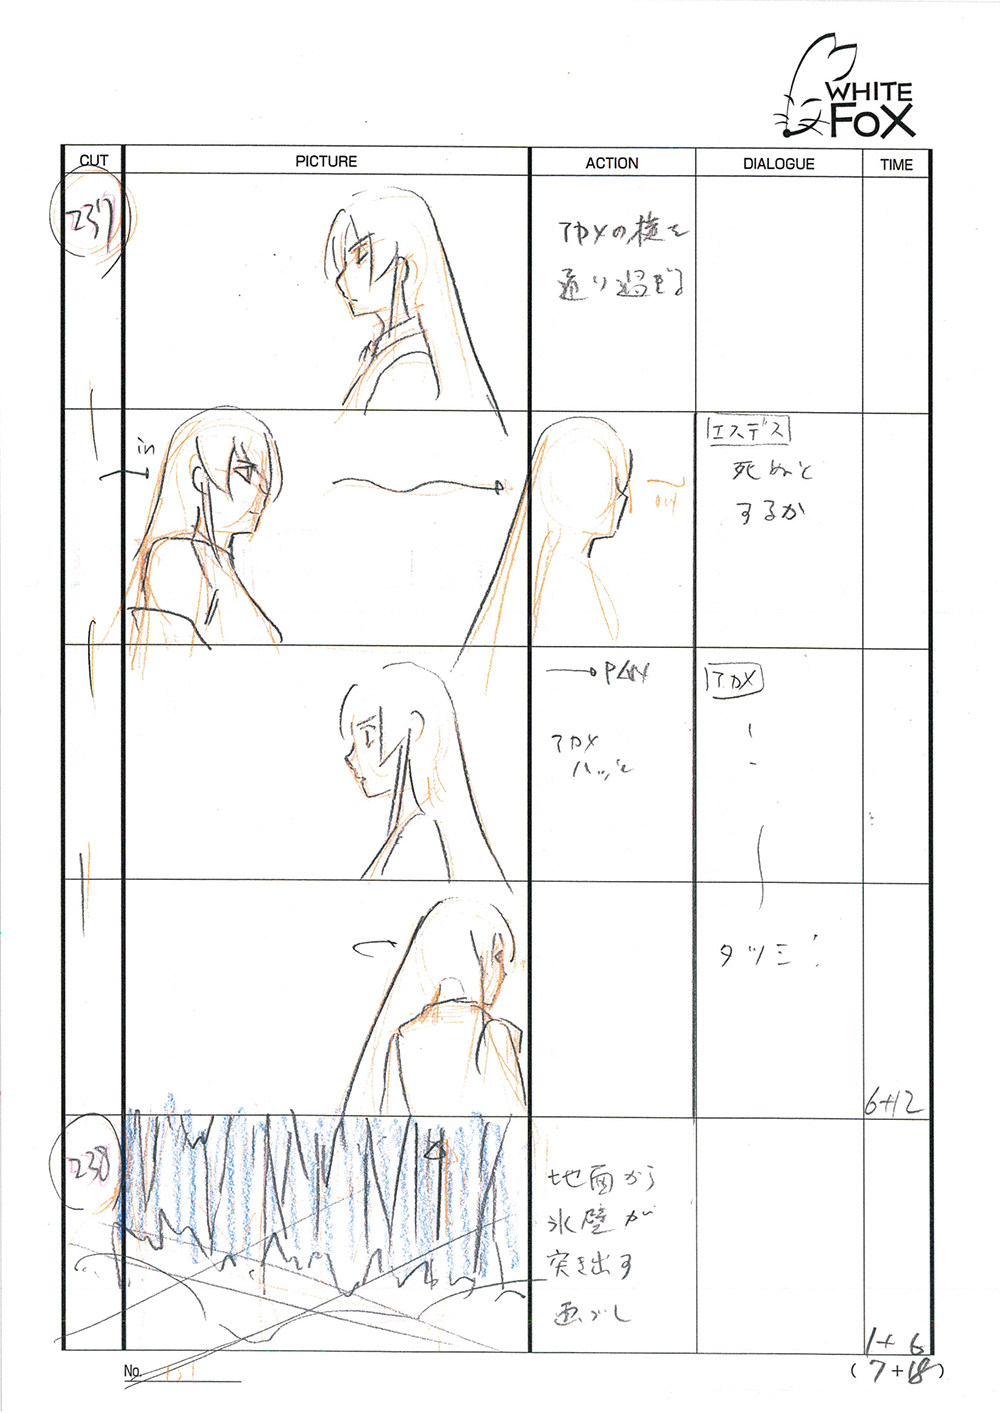 Akame ga Kill Episode 24 Storyboard Leak 135